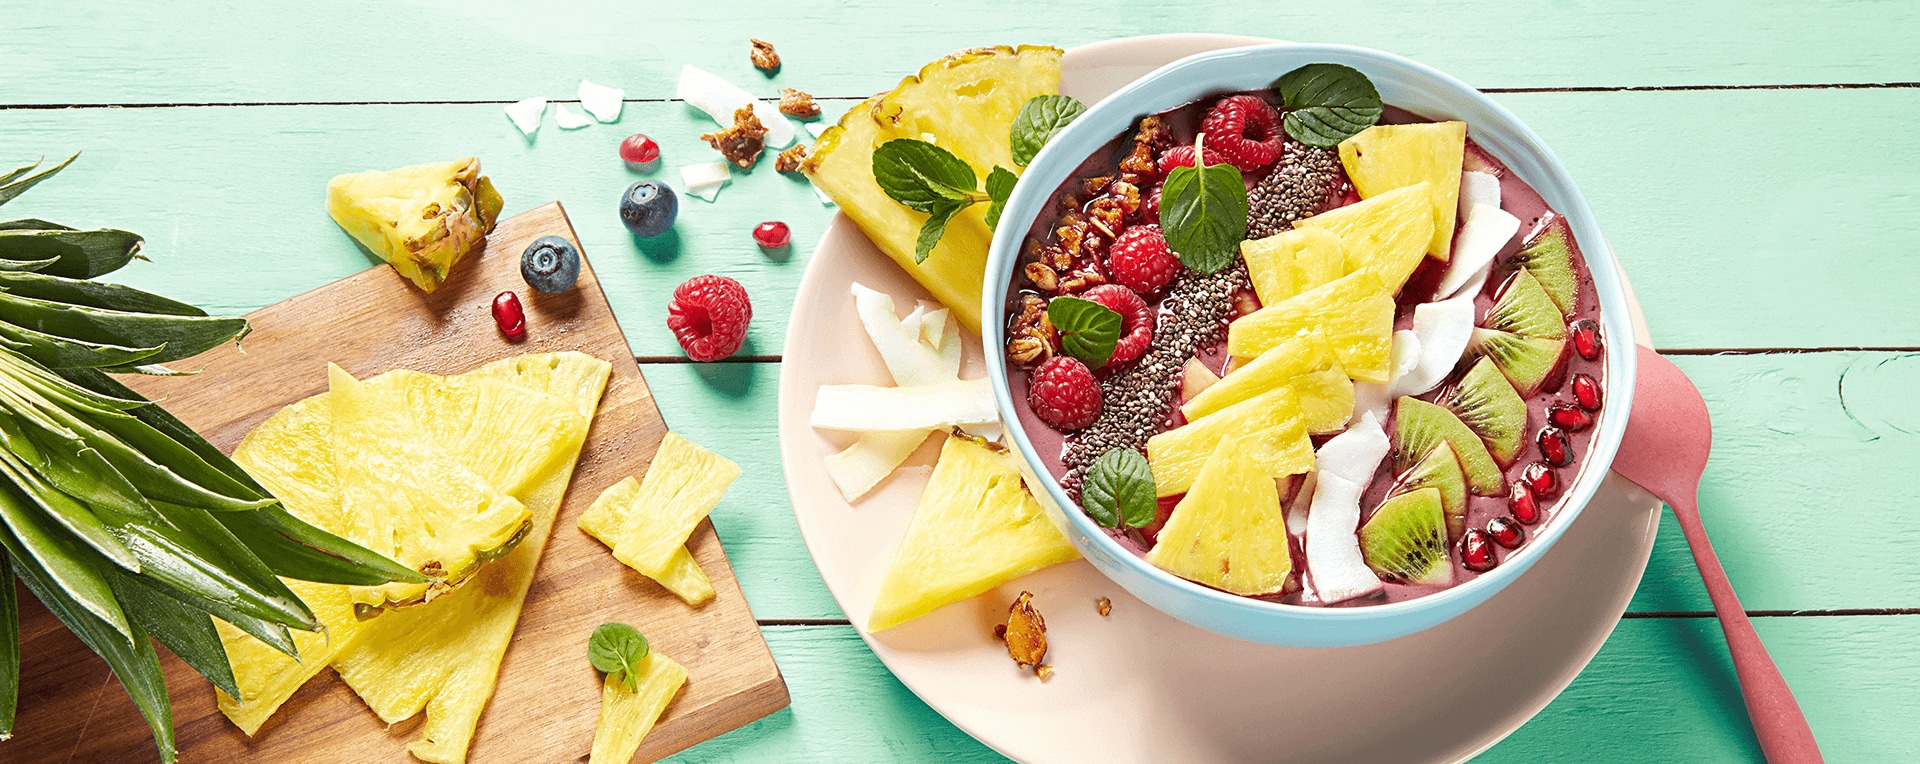 Ananas-Açaí-Smoothie-Bowl mit Joghurt und Superfoodtopping